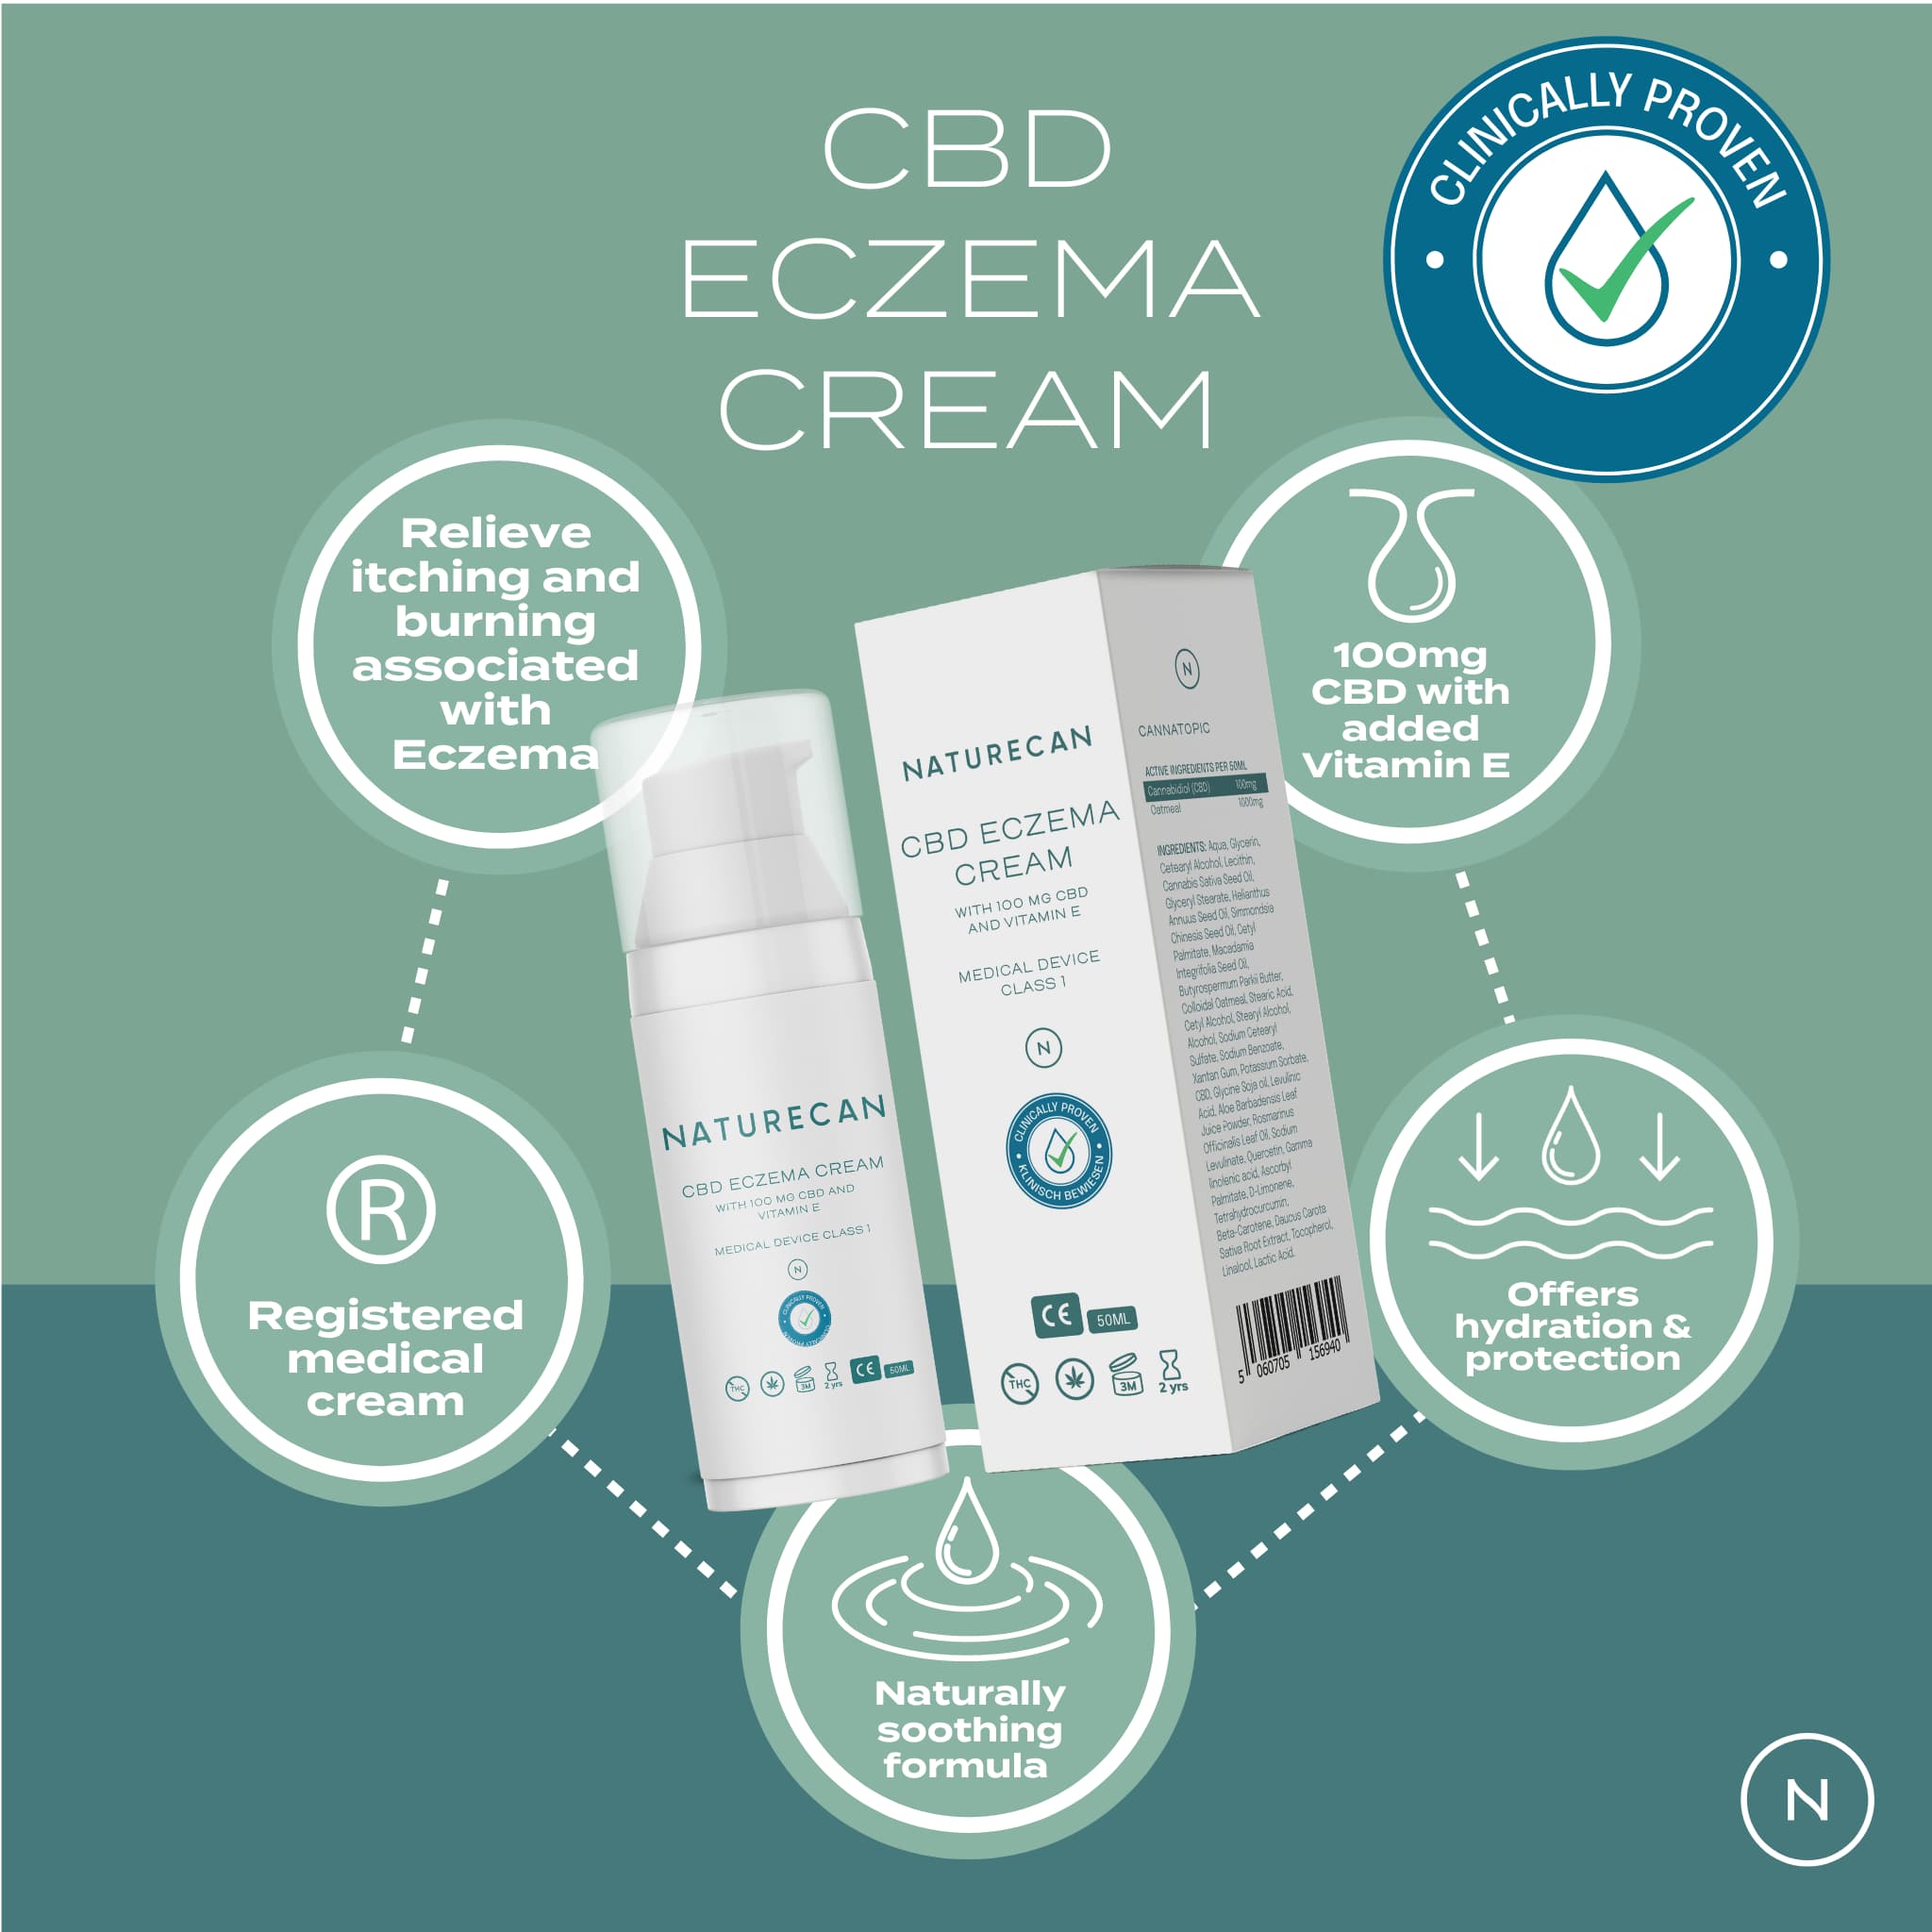 CBD Eczema Cream Benefits